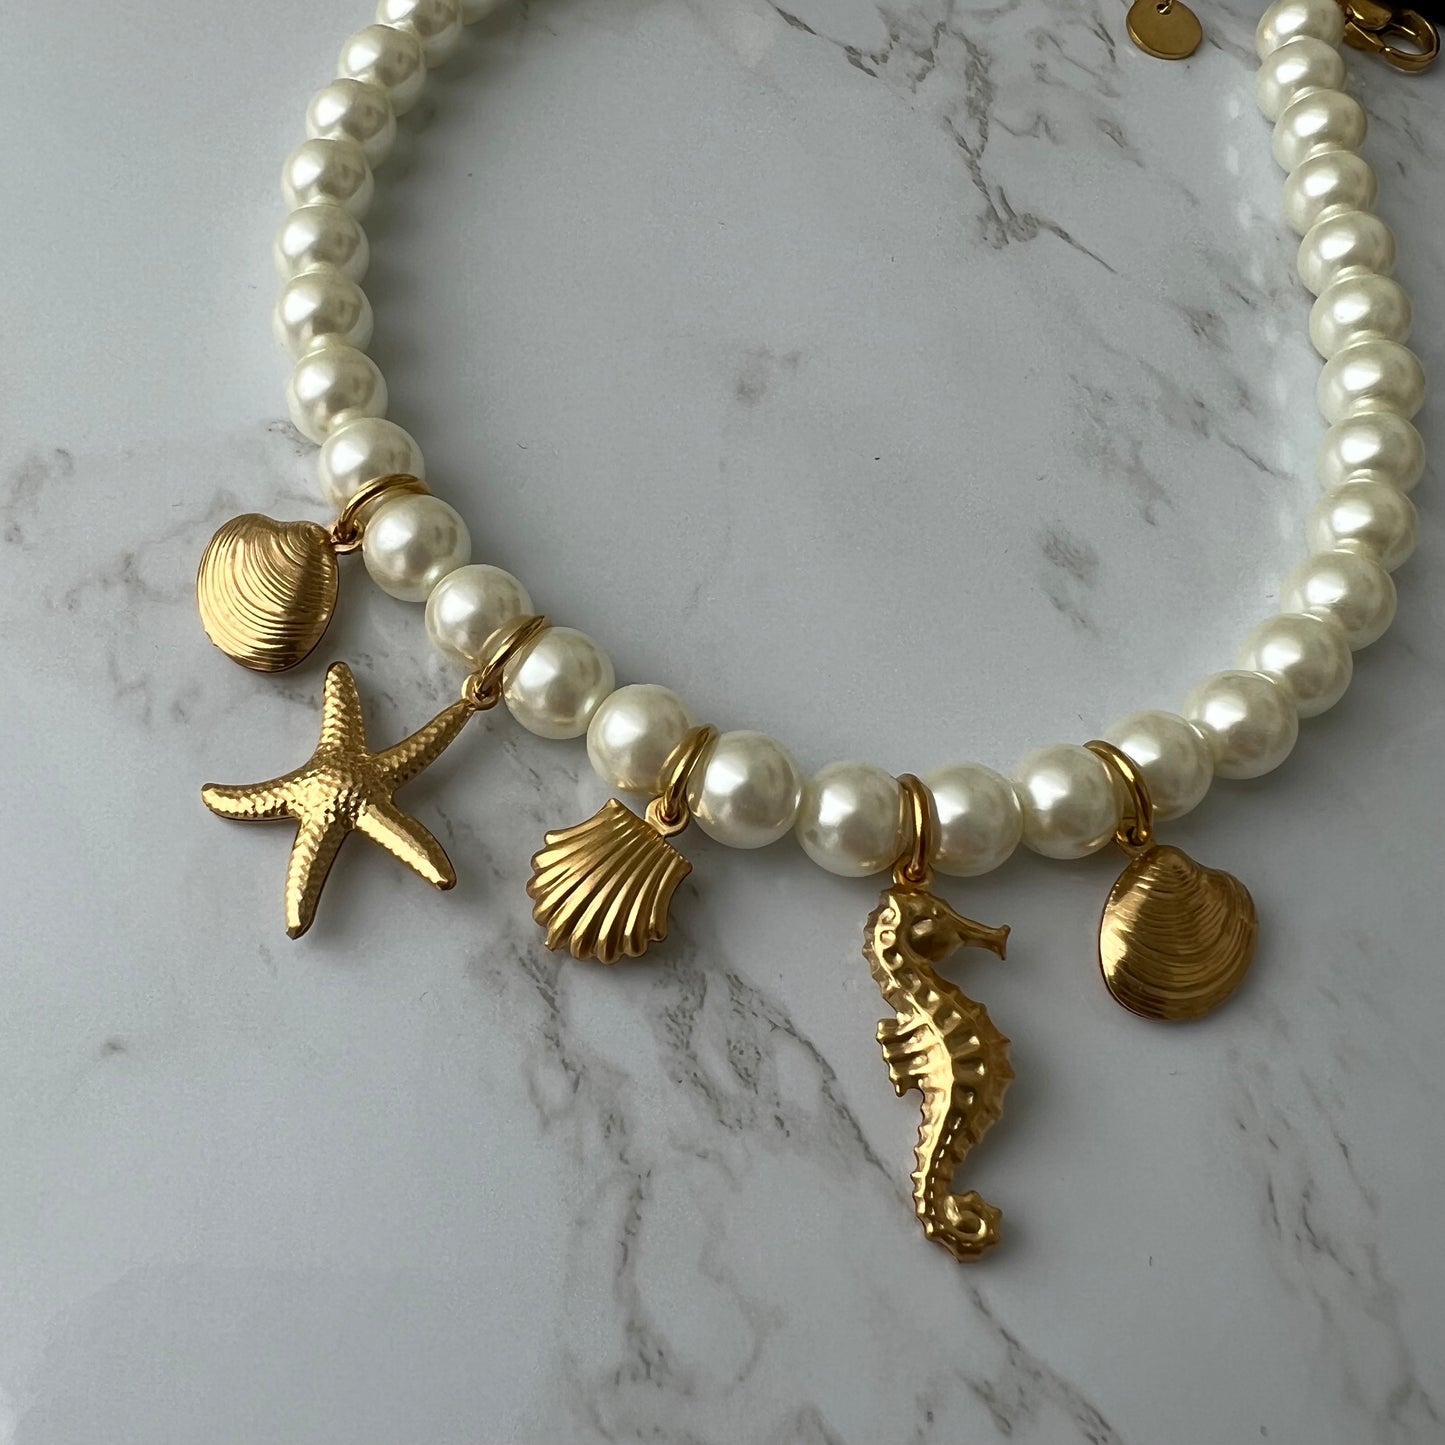 Mermaids treasures necklace.